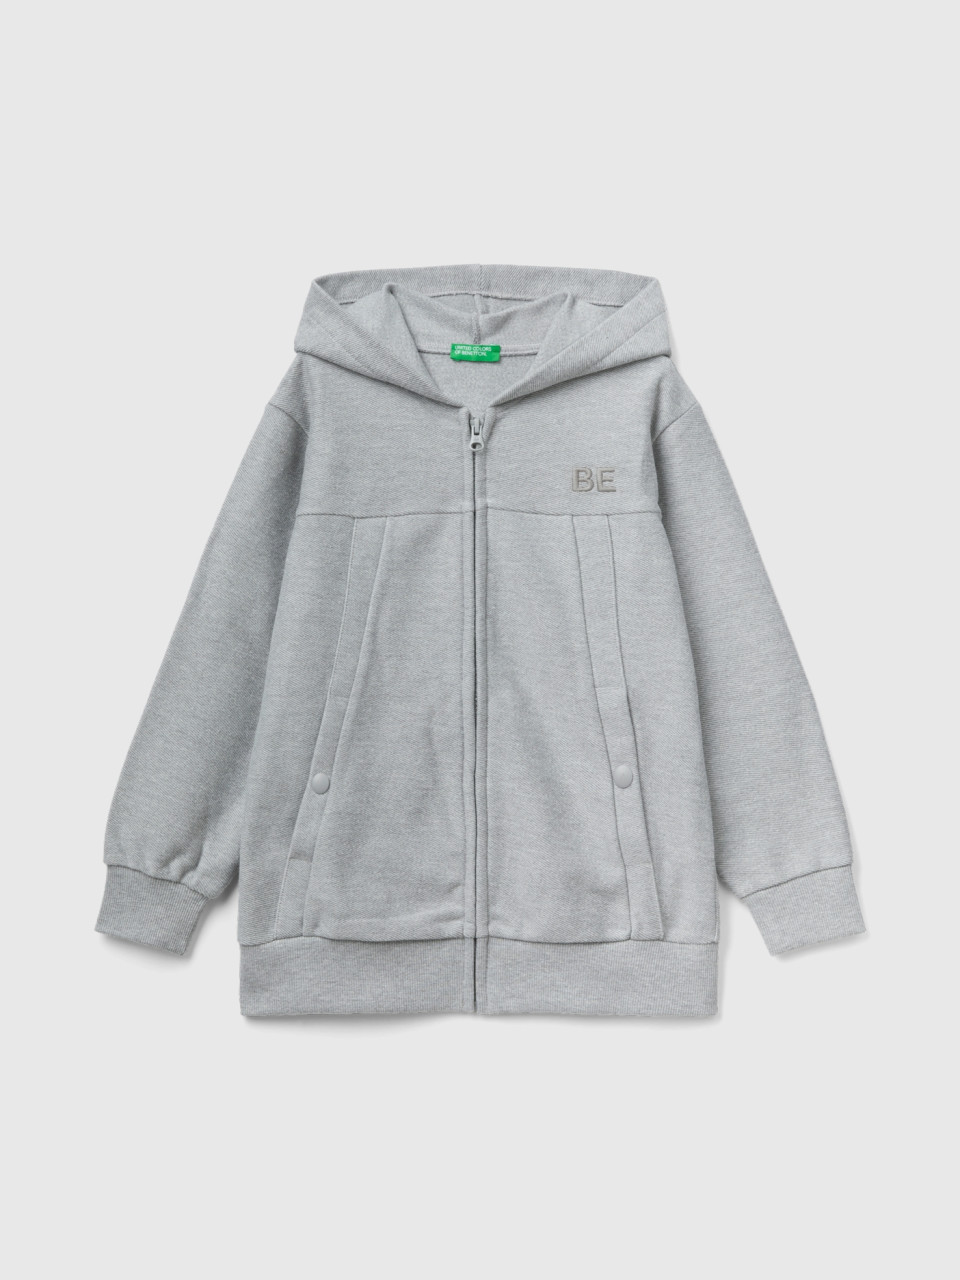 Benetton, Zip-up Sweatshirt With be Embroidery, Gray, Kids